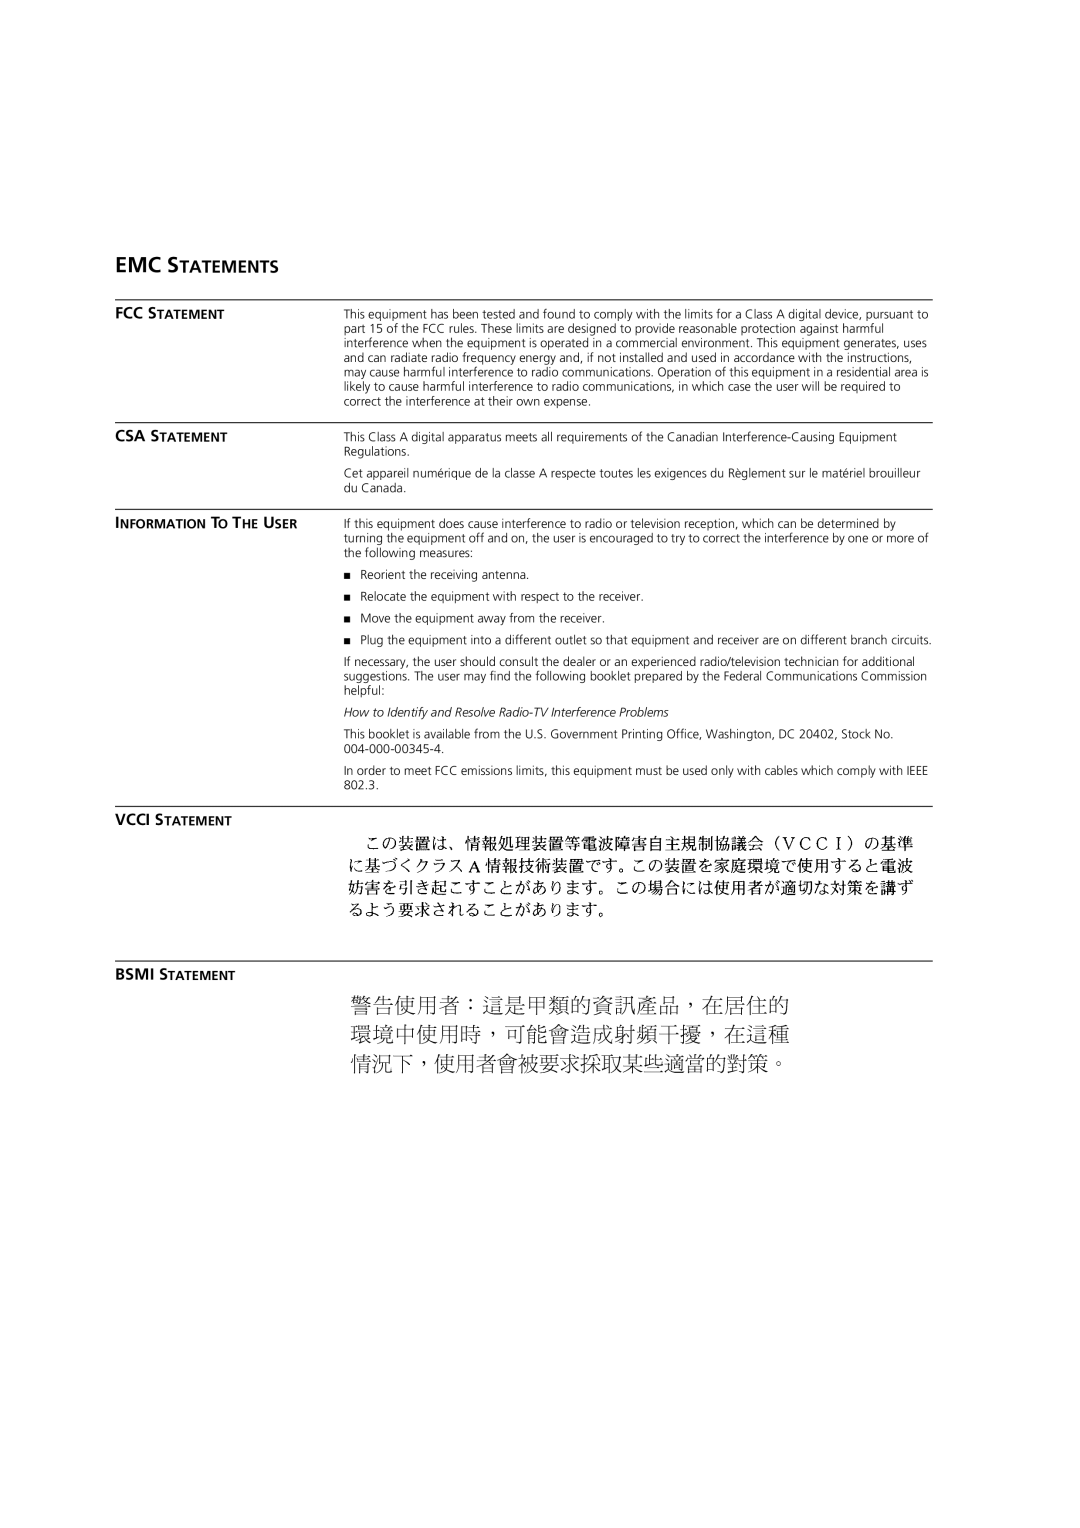 3Com 3C16987 manual Emc Statements, Fcc Statement, Csa Statement, Information To The User, Vcci Statement, Bsmi Statement 